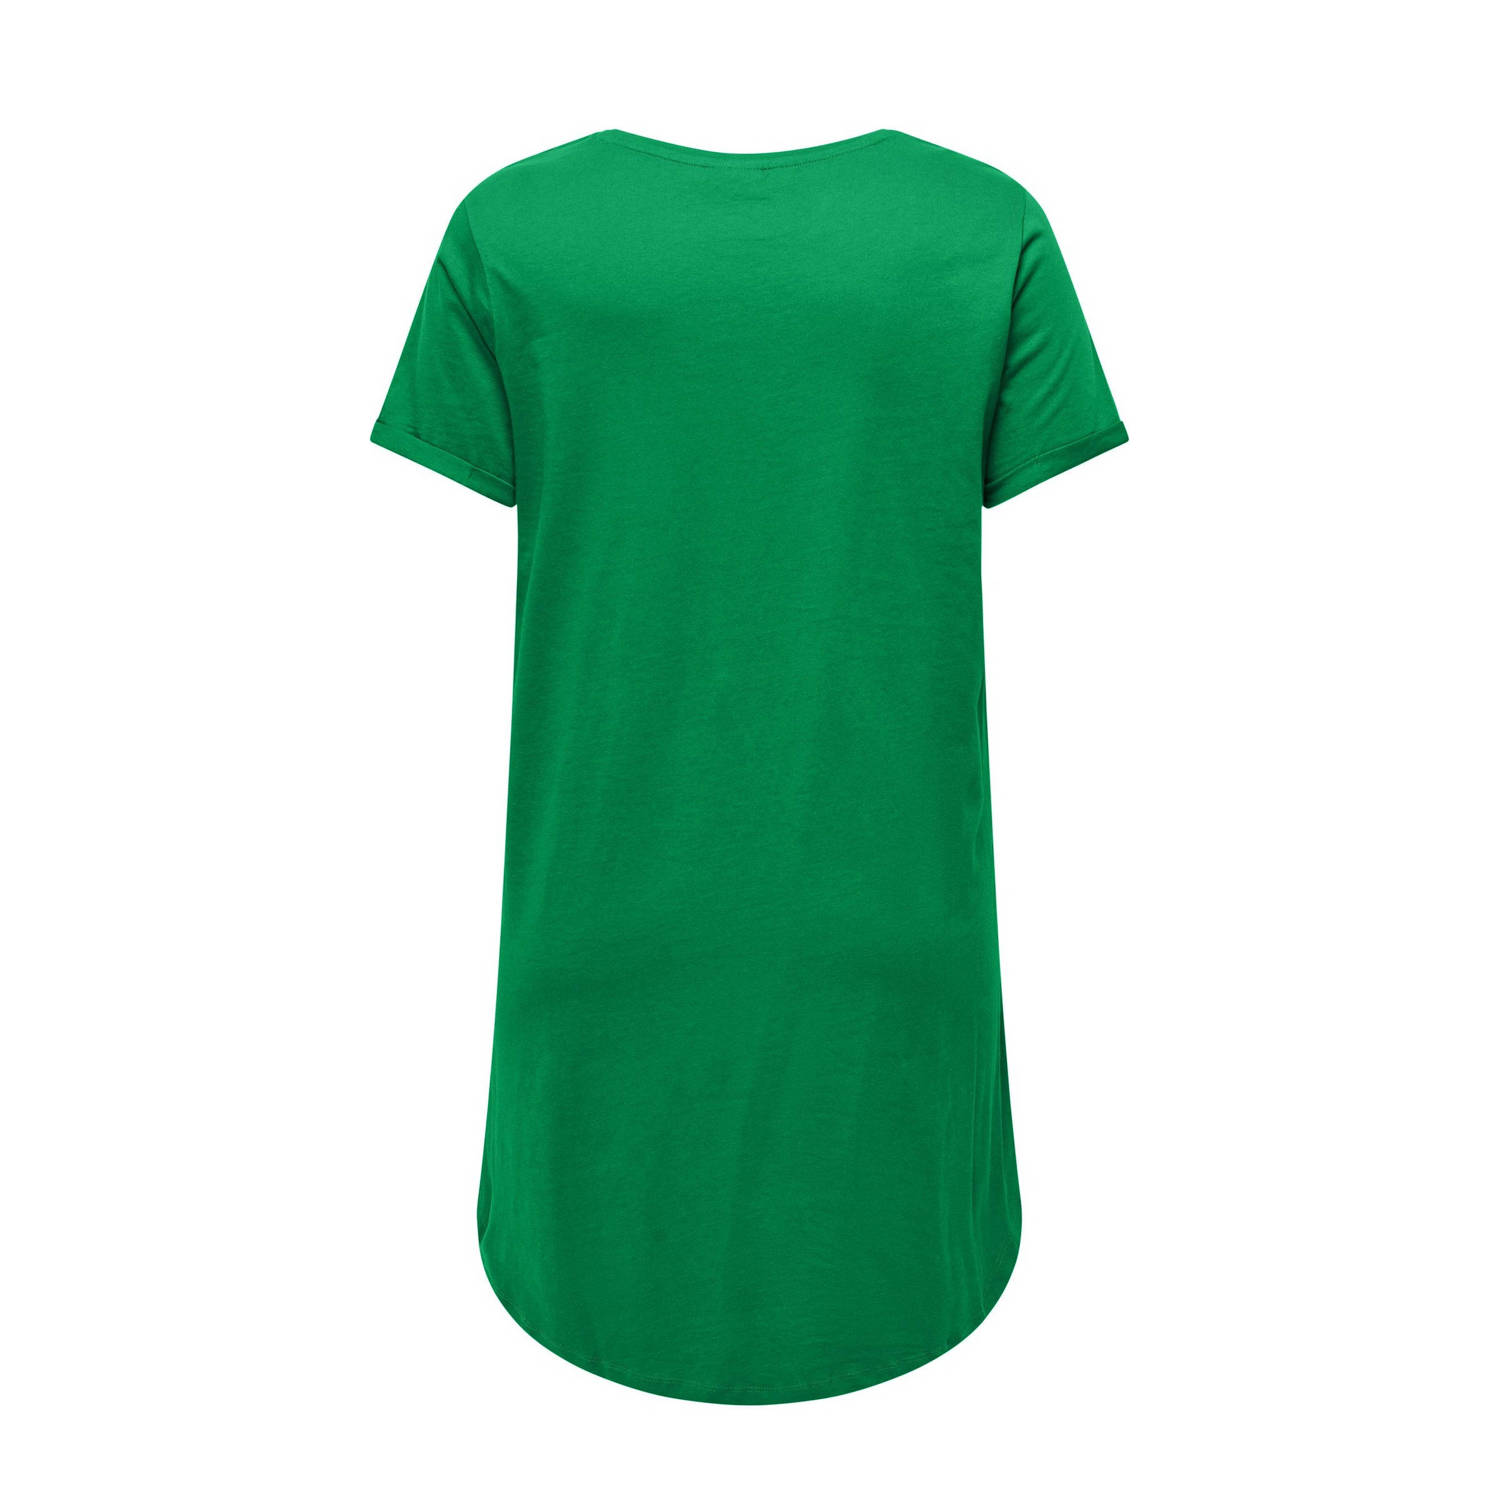 ONLY CARMAKOMA T-shirtjurk groen